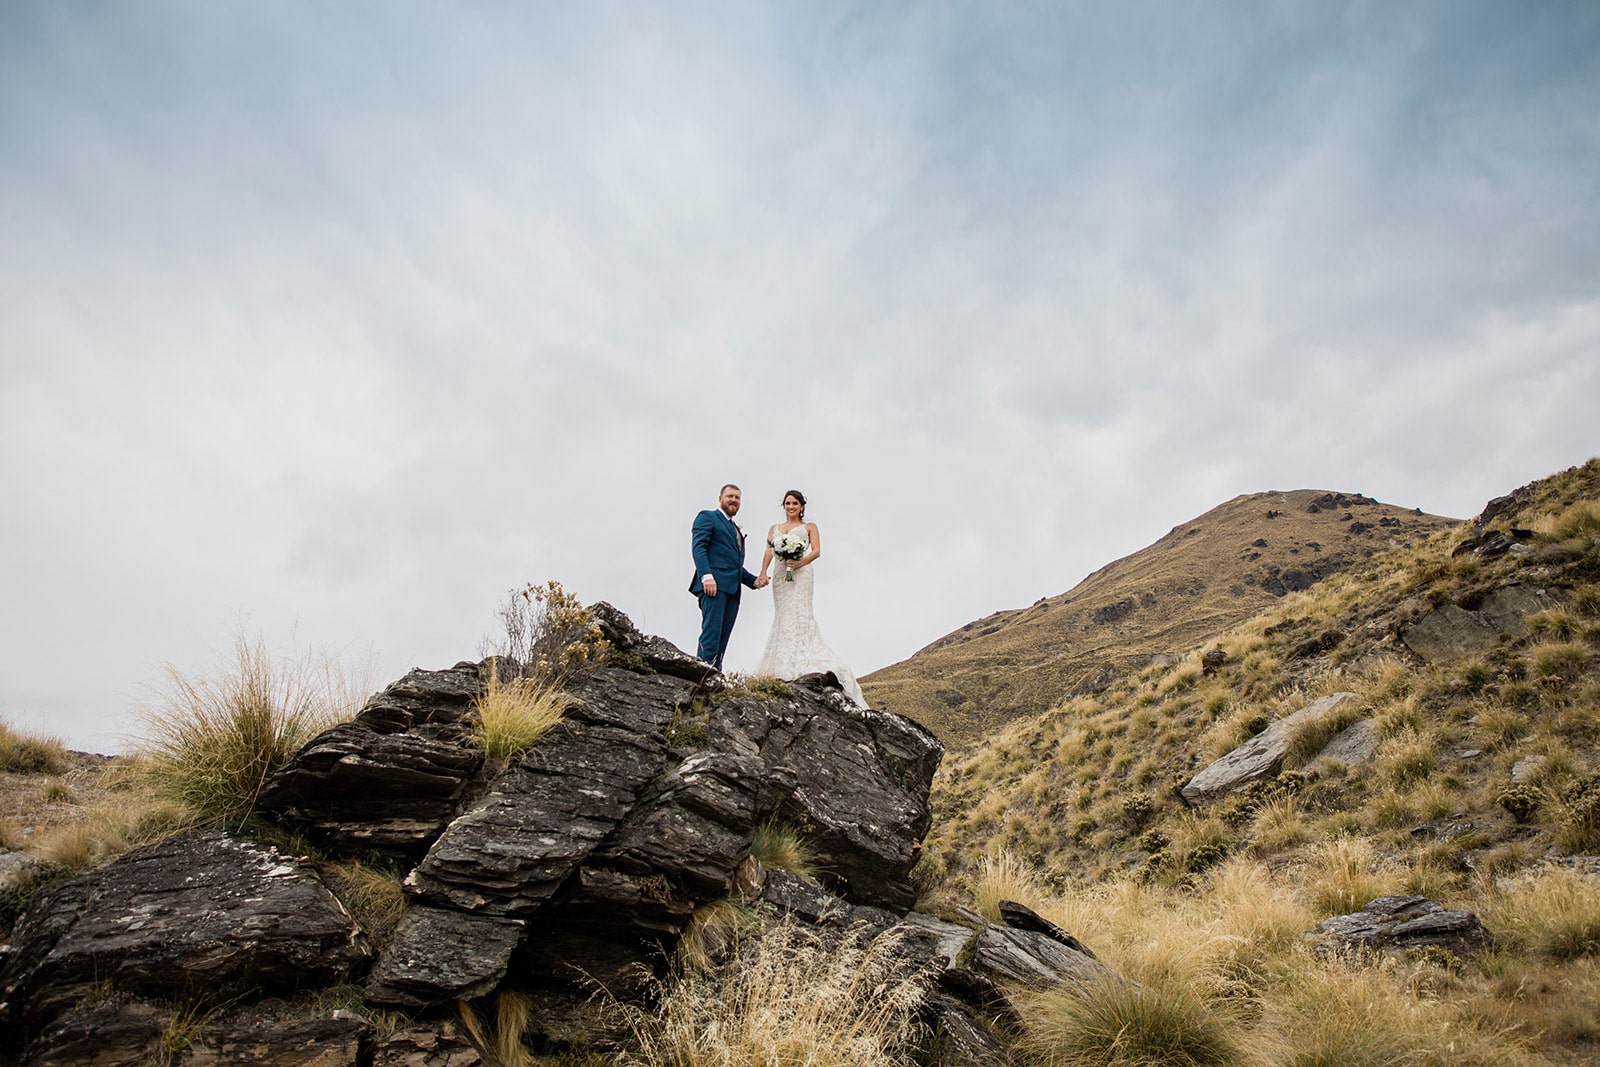 Heli Wedding in Queenstown New Zealand with American couple